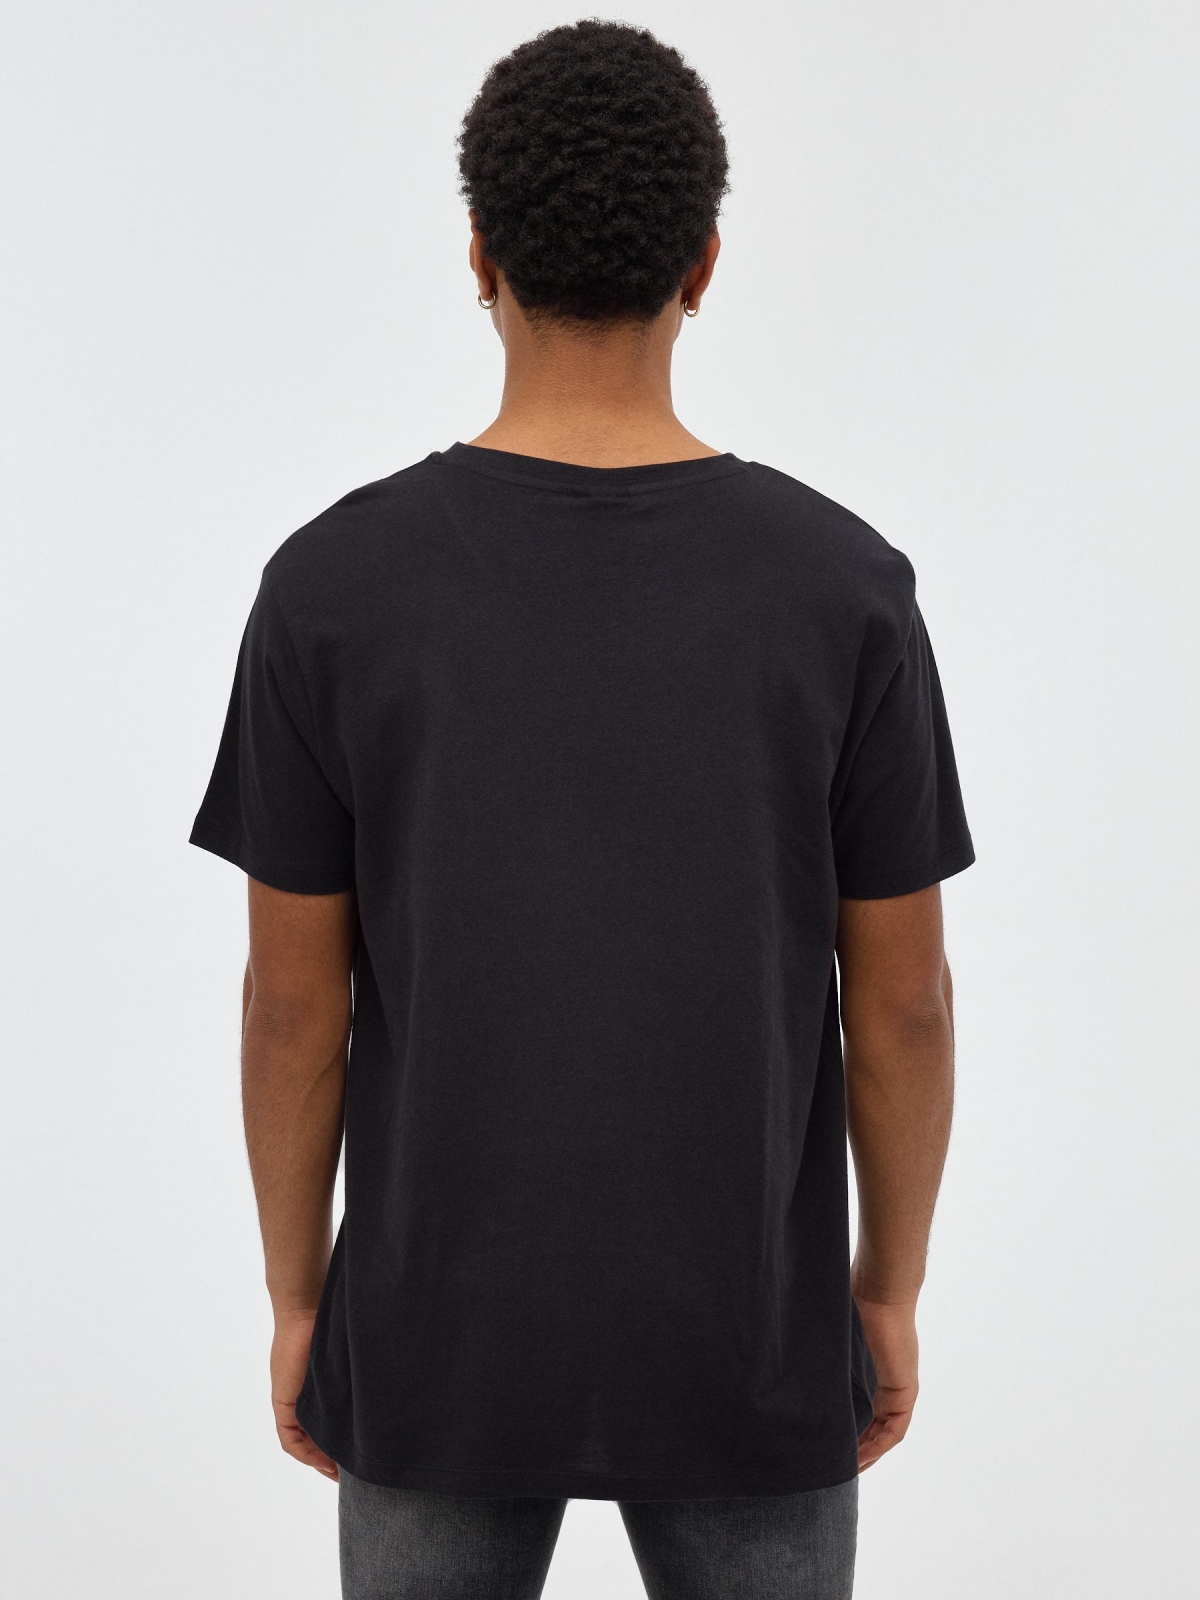 T-shirt preta ACDC preto vista meia traseira